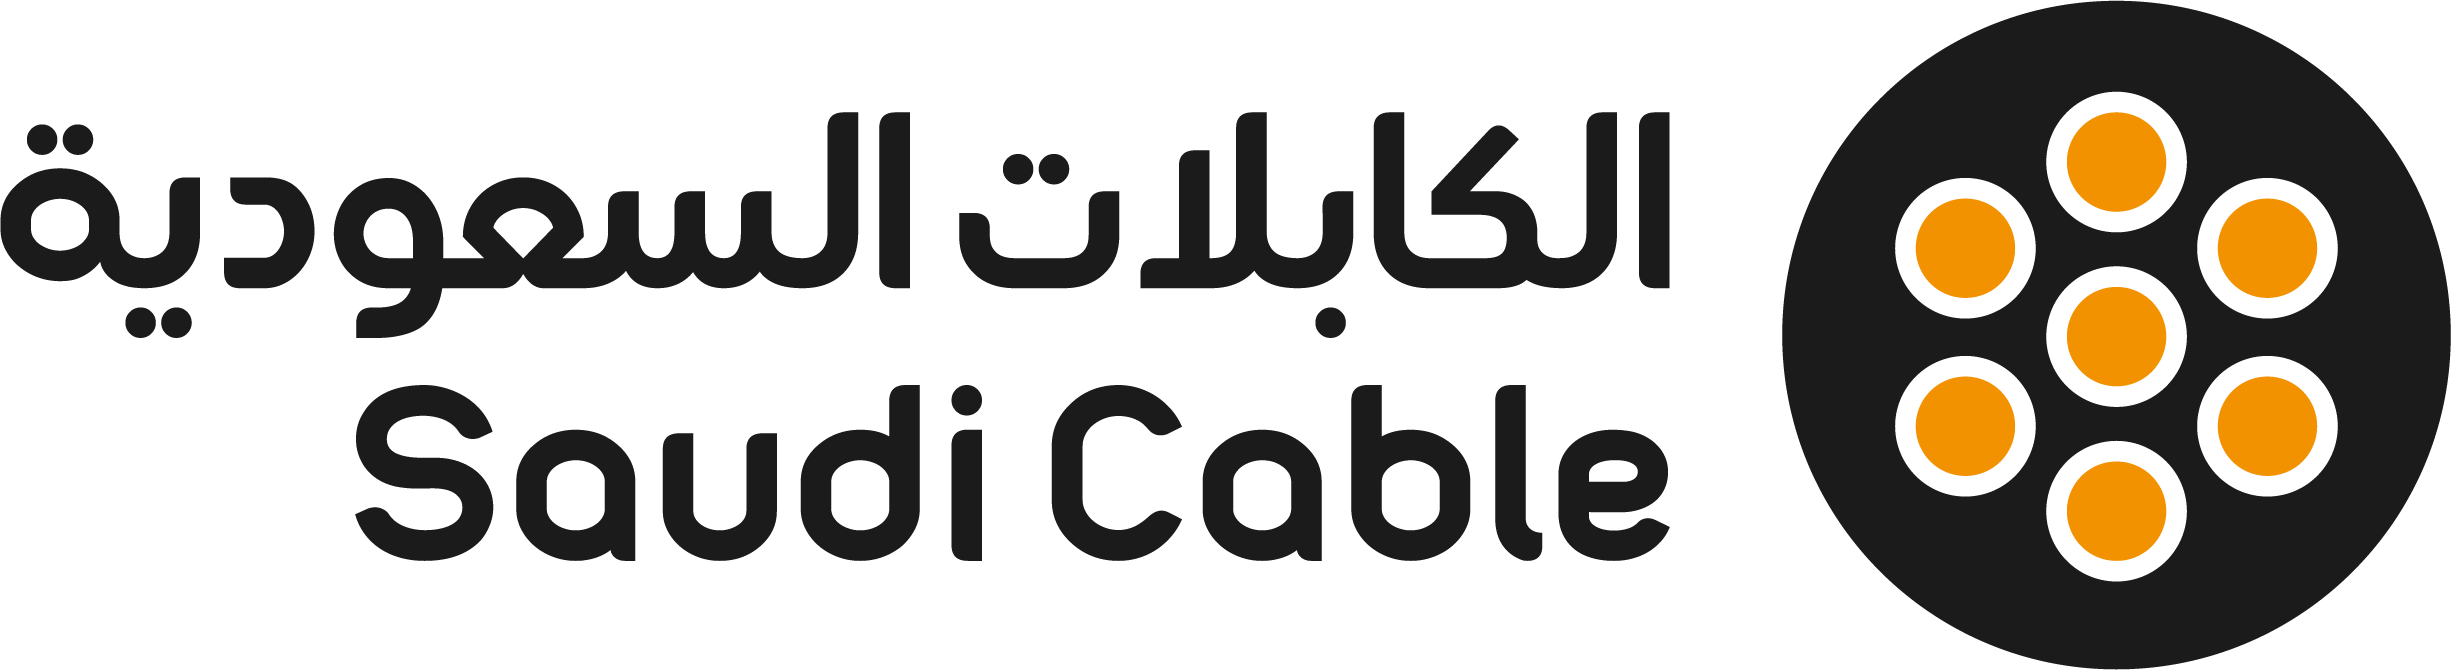 Saudi Cable Company logo large (transparent PNG)